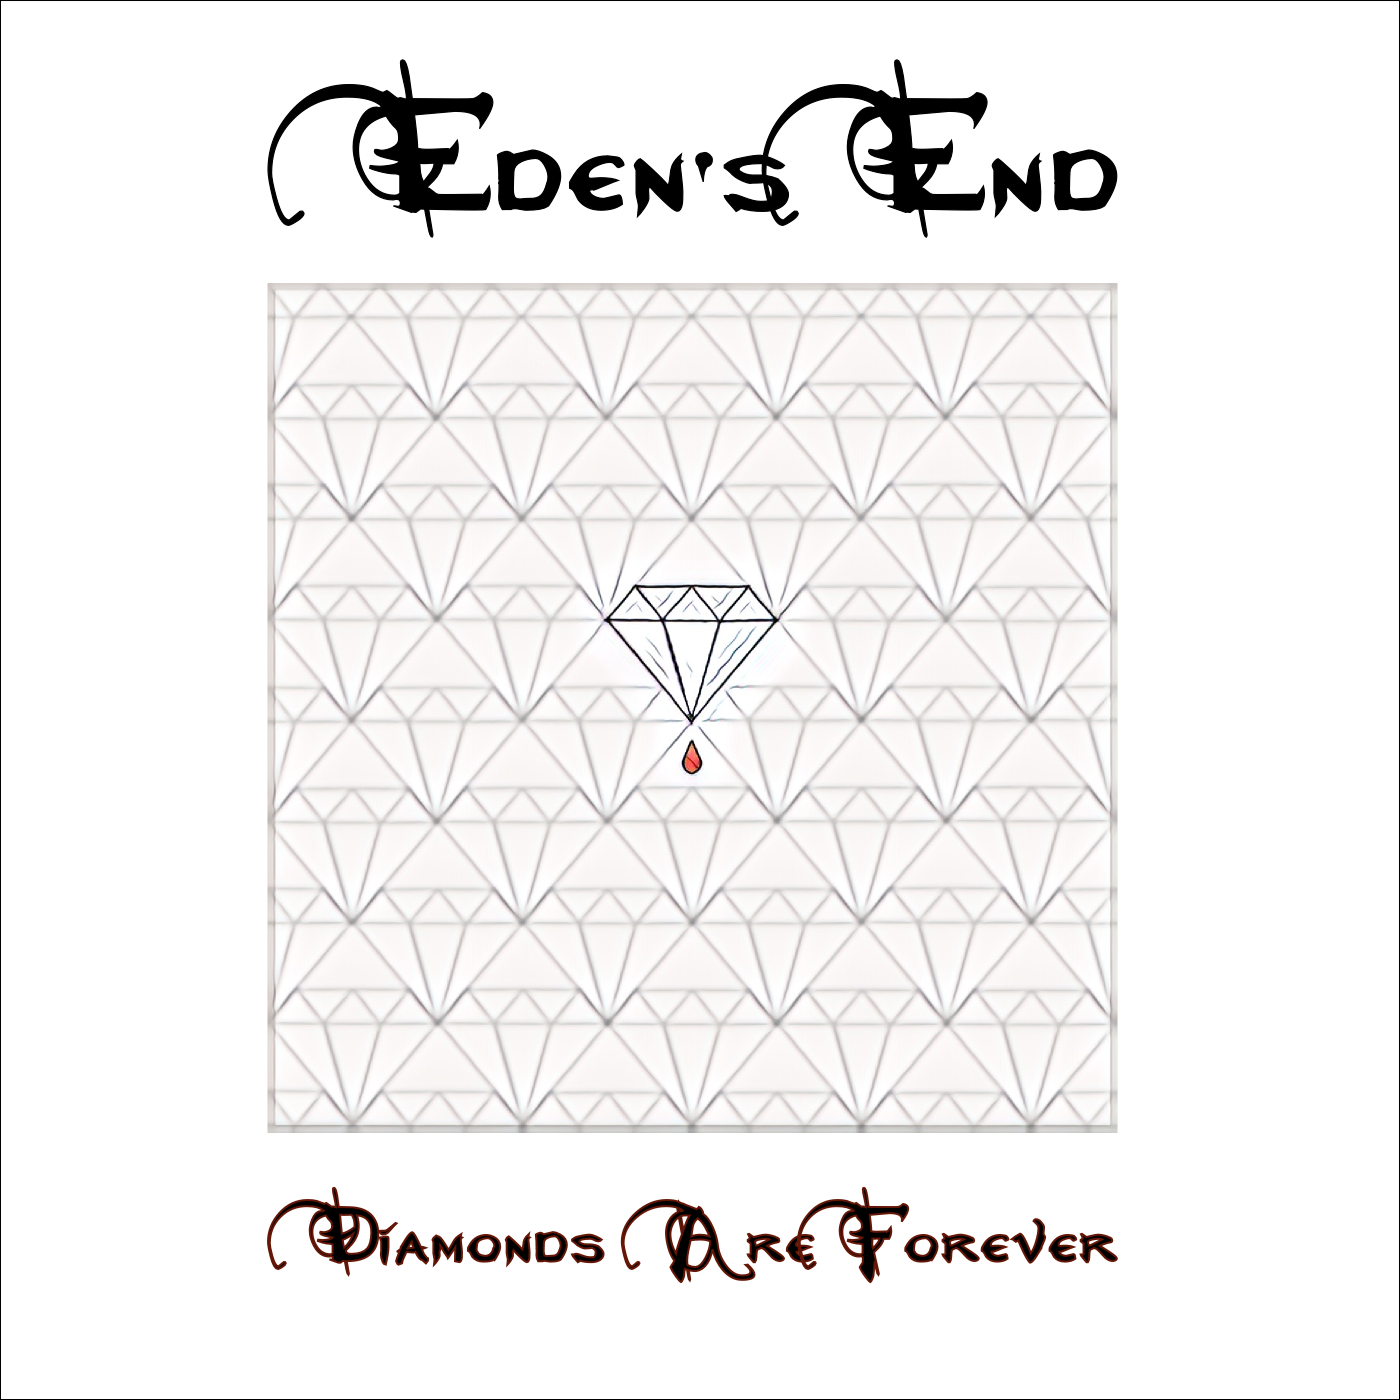 Diamonds Are Forever single album cover art